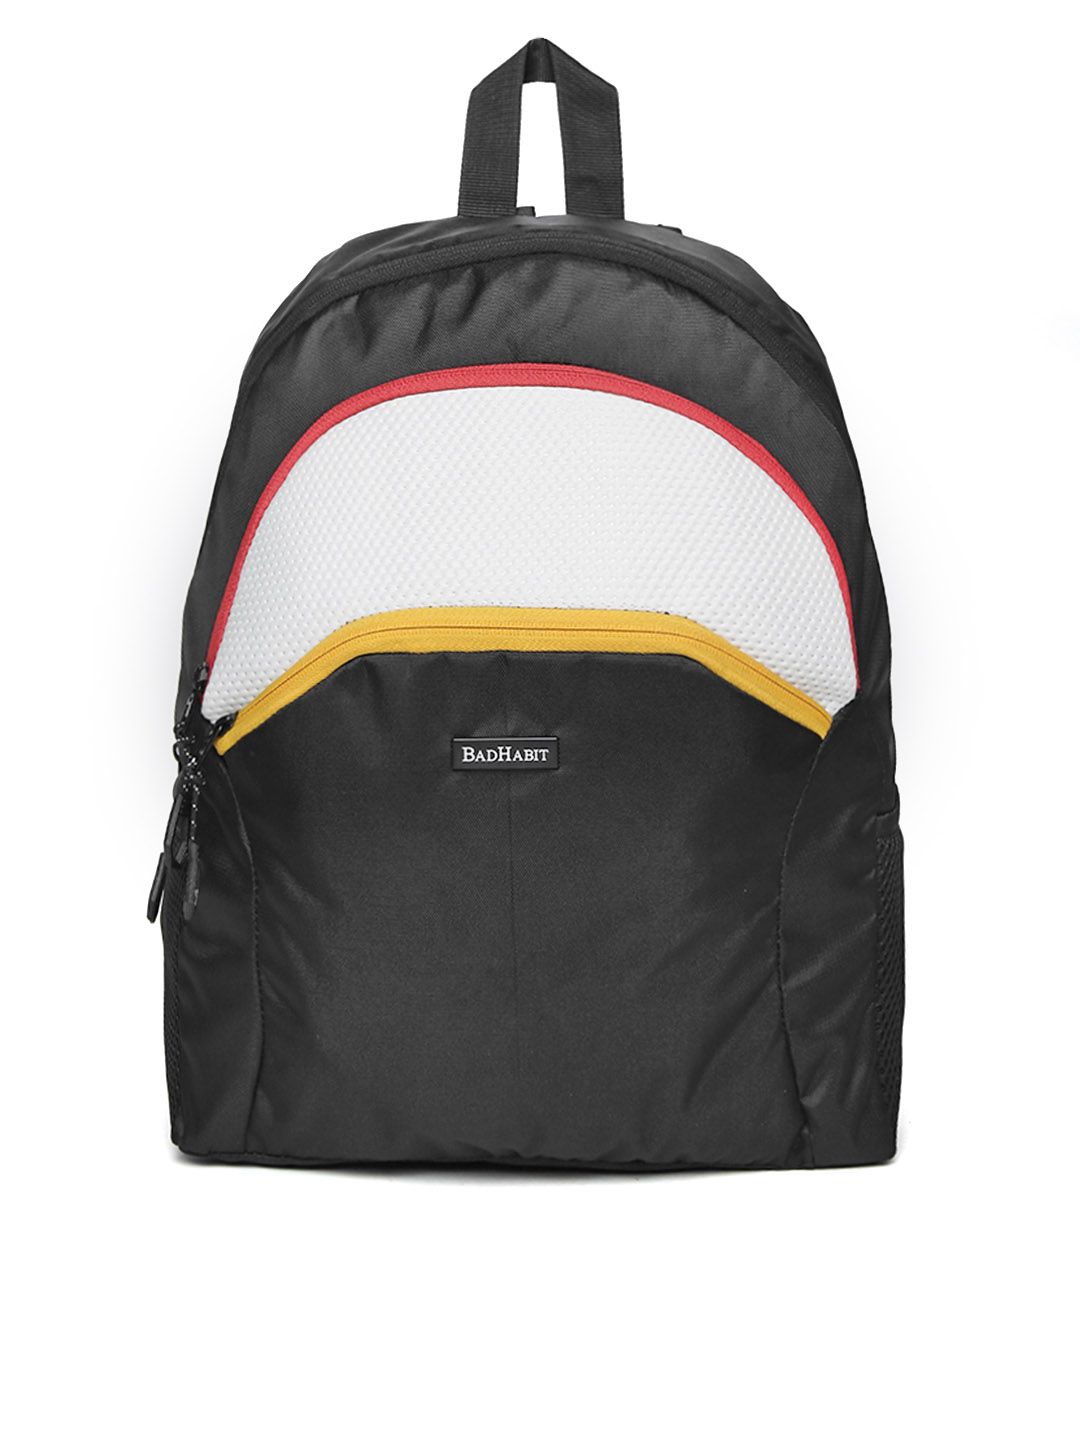 BAD HABIT Unisex Black & White Colourblocked Backpack Price in India